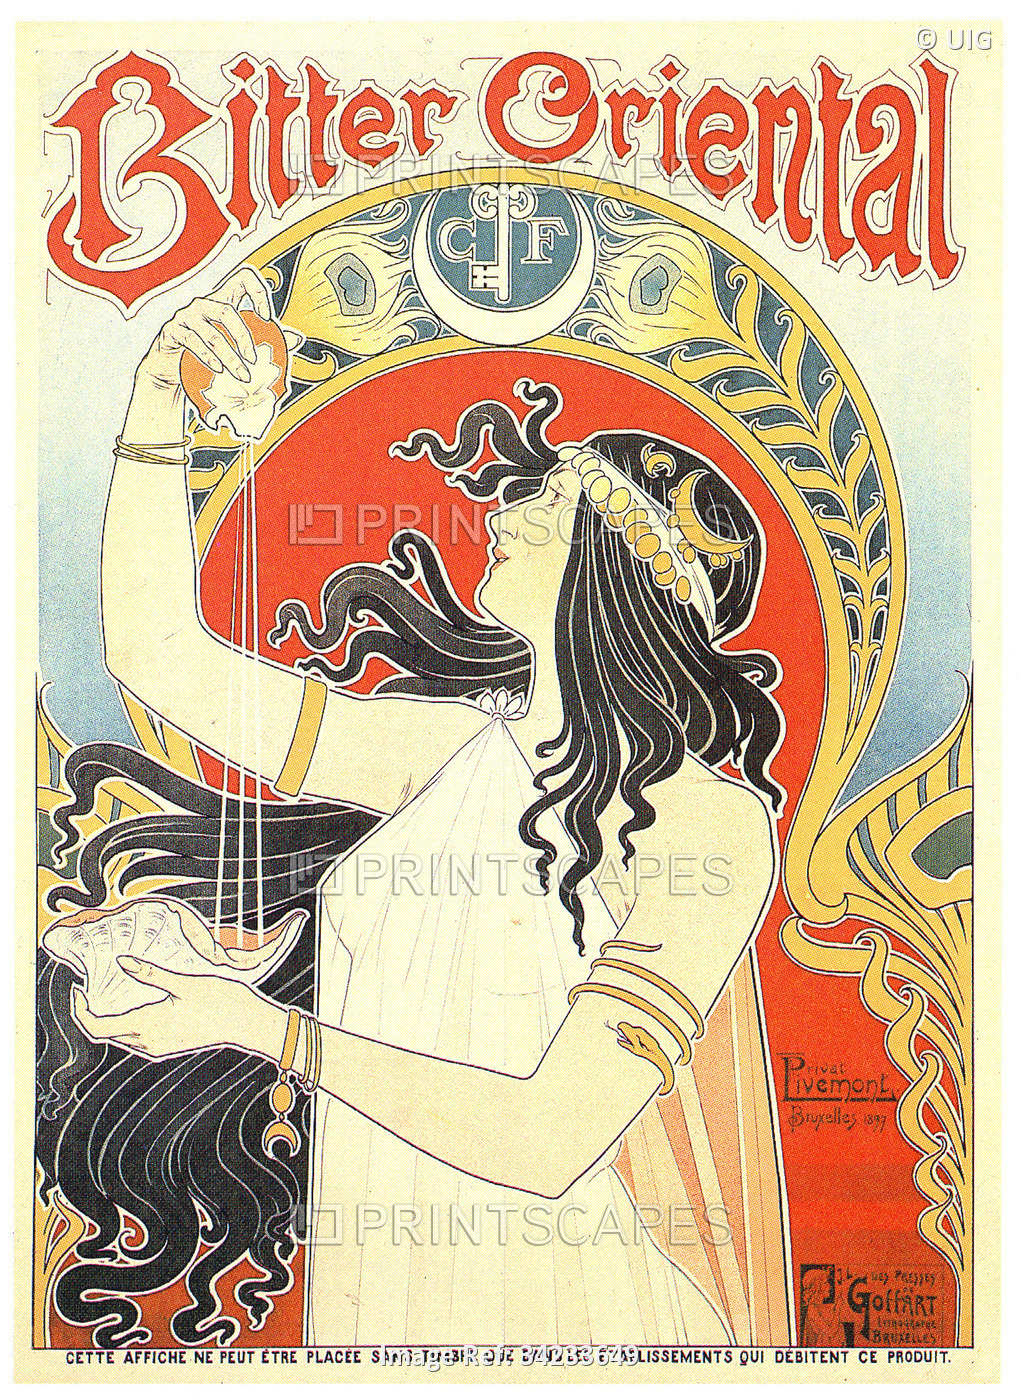 Belgium: 'Bitter Oriental' Art Nouveau advertising poster, Henri Privat-Livemont, 1897